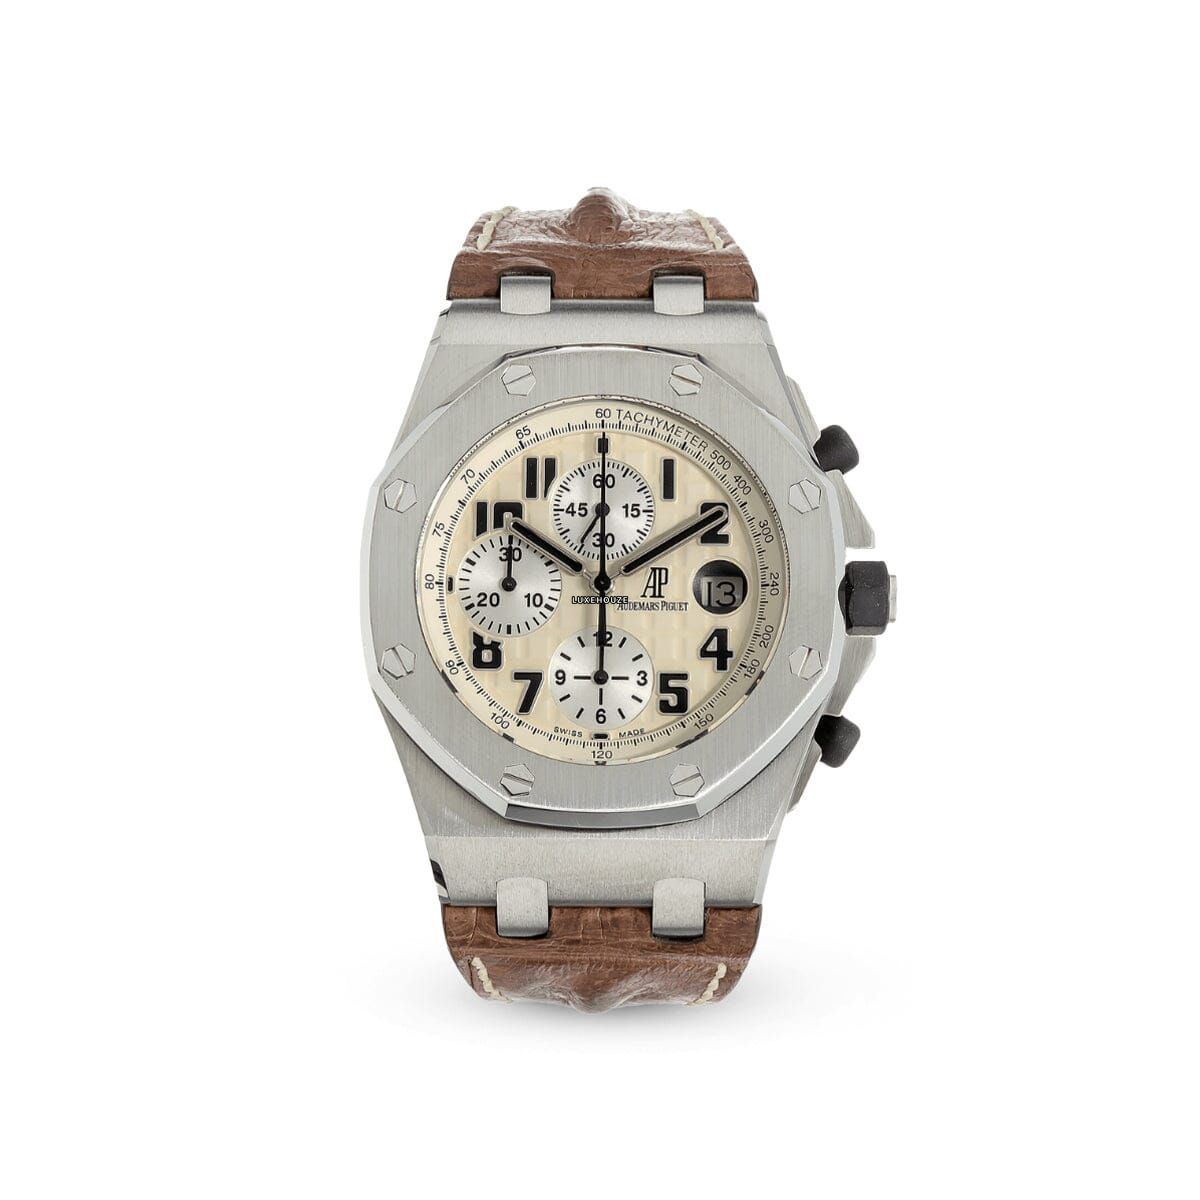 Royal Oak Offshore Safari 26170ST.OO.D091CR.01 White Watches Audemars Piguet 